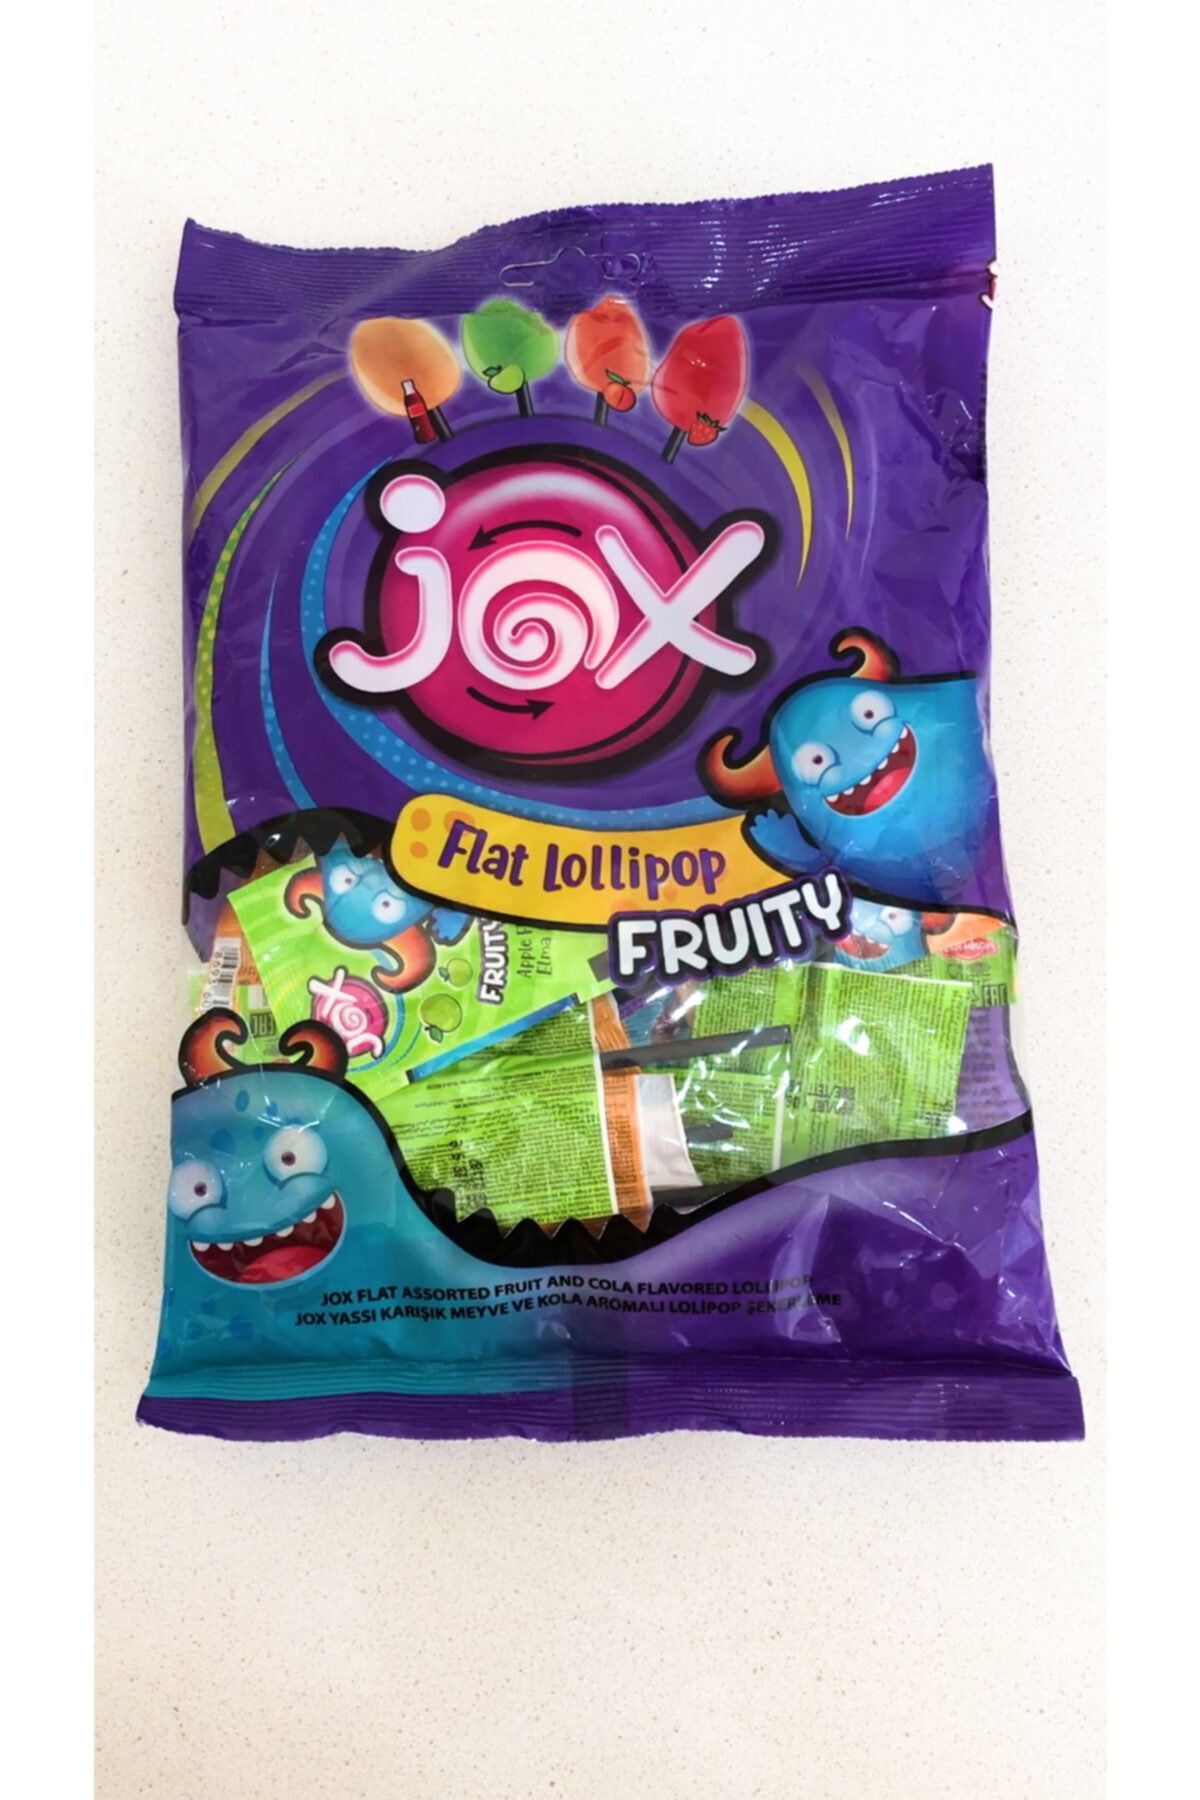 Durukan Şekerleme Jox Flat Lollipop Fruıty Şeker